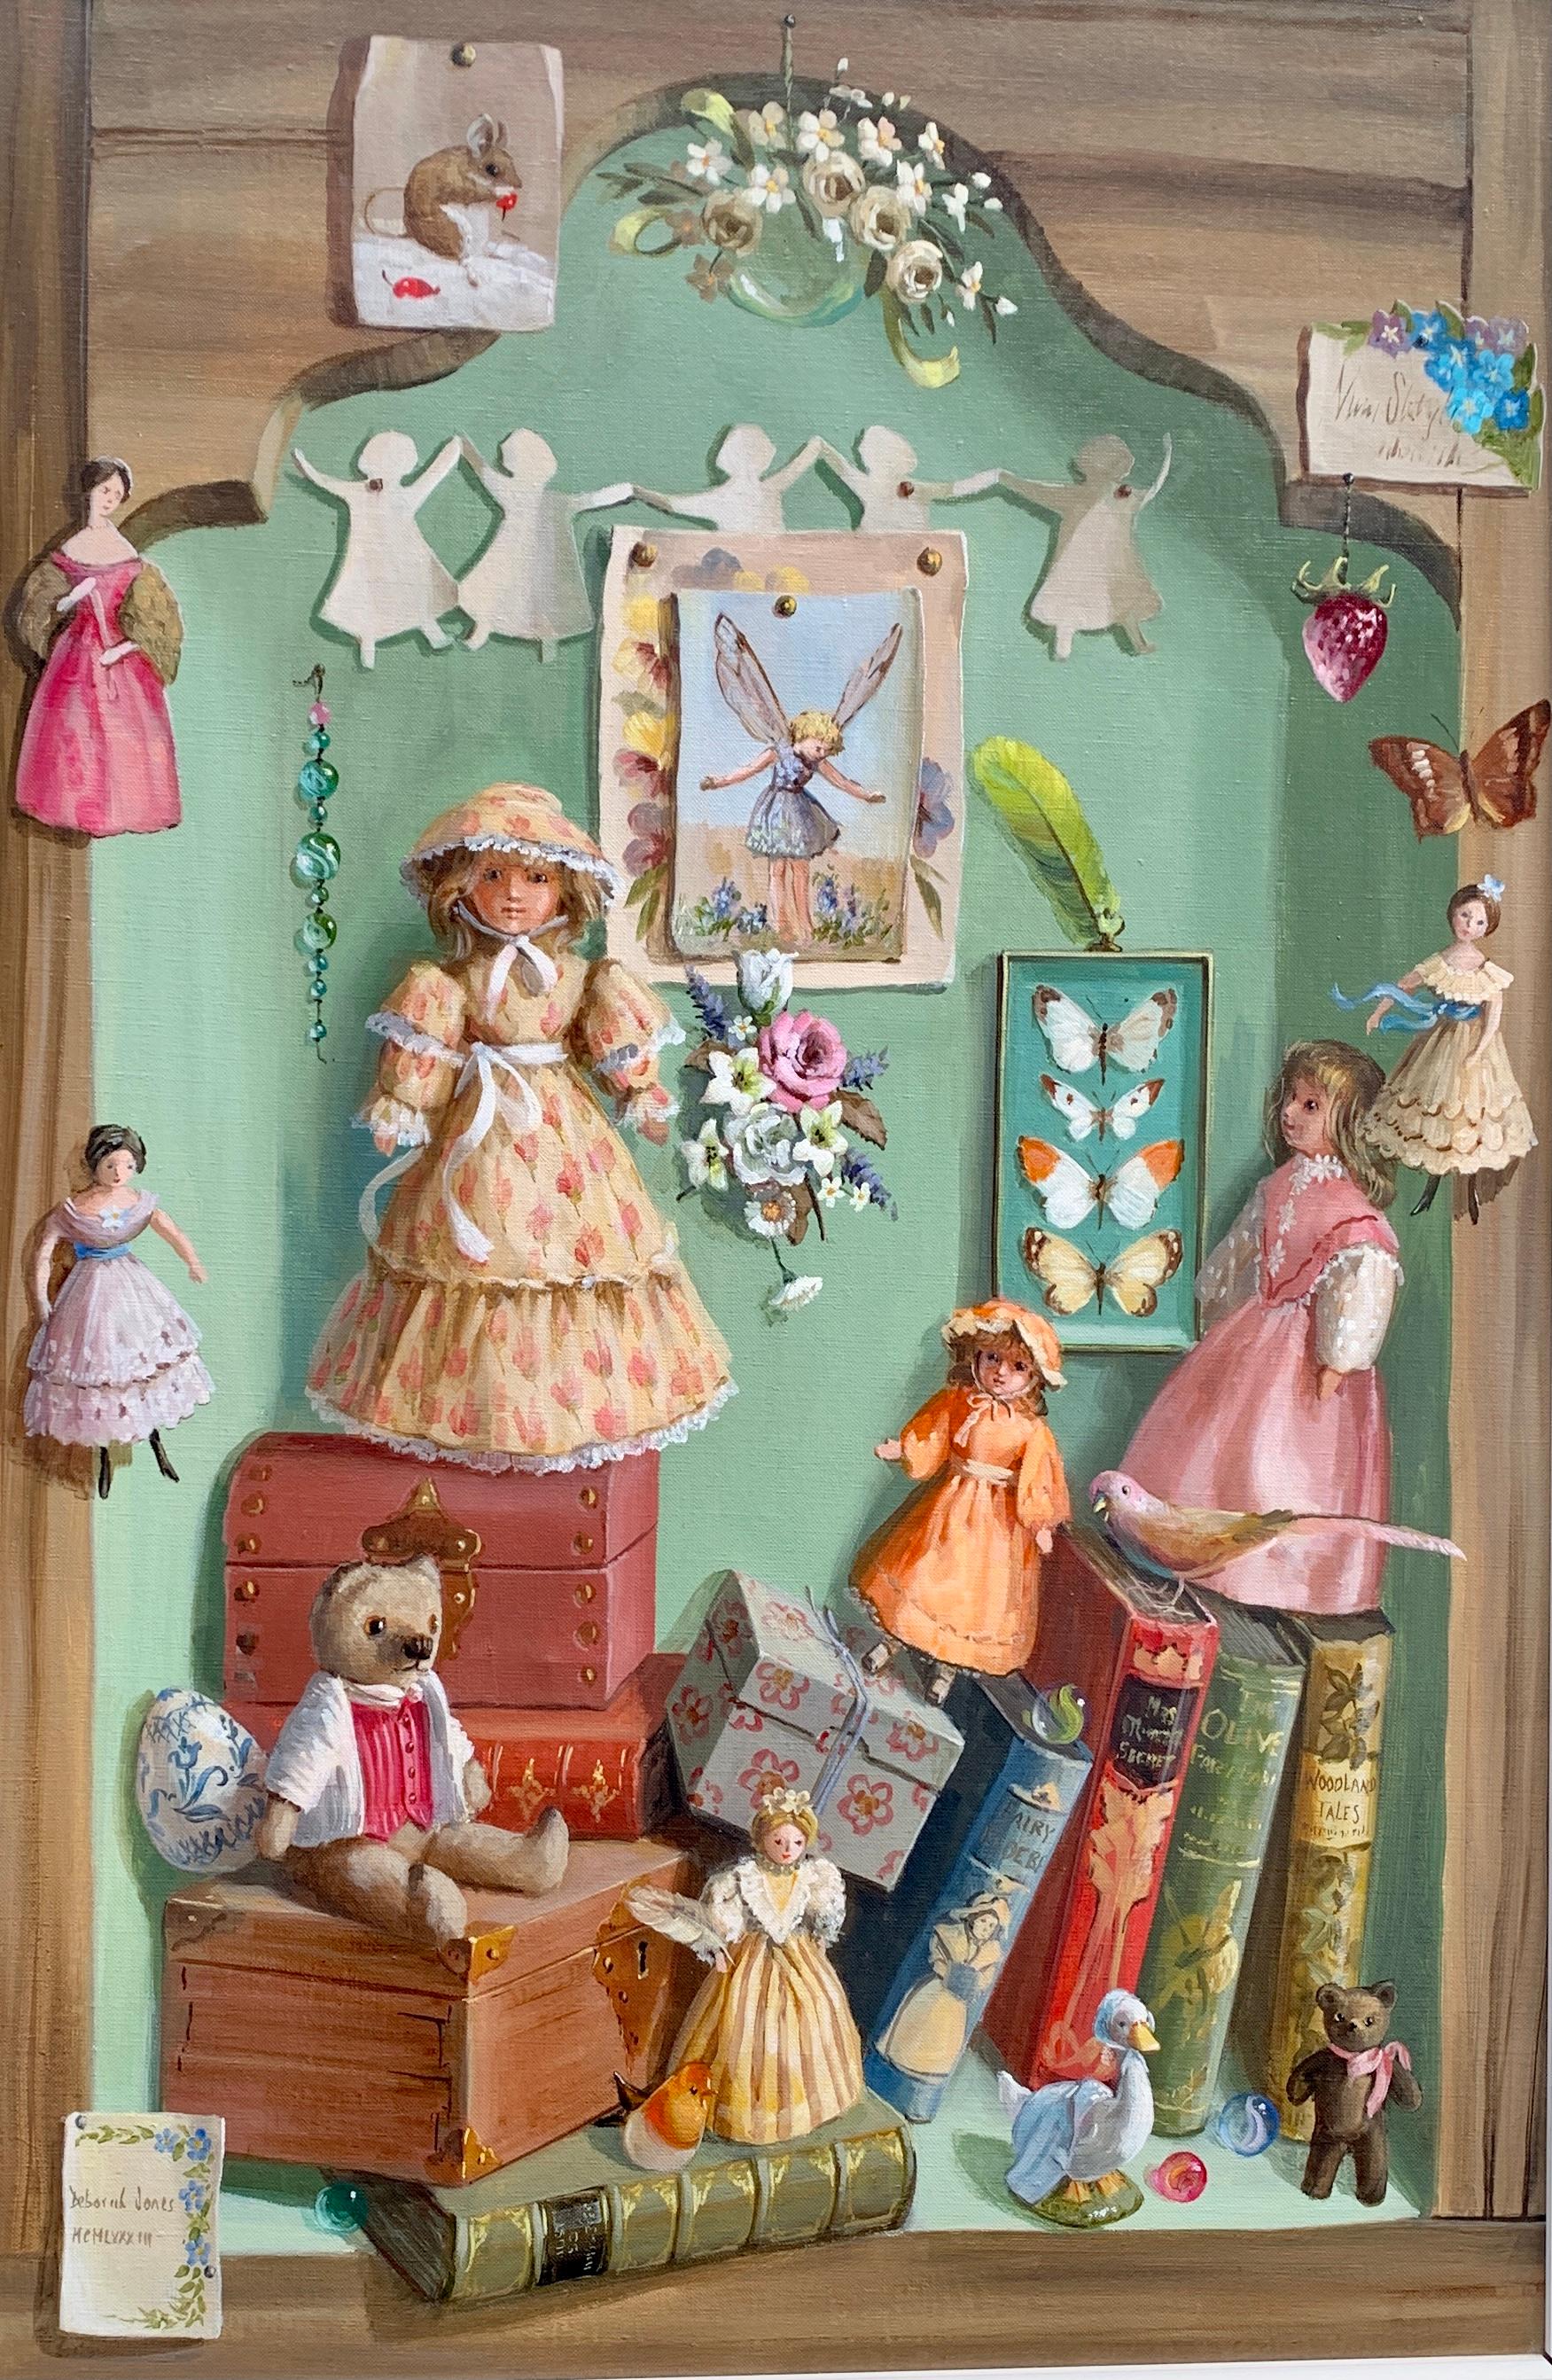 Still life study of treasures,  dolls, shells, teddy , flowers, books, glass. - Painting by Deborah Jones